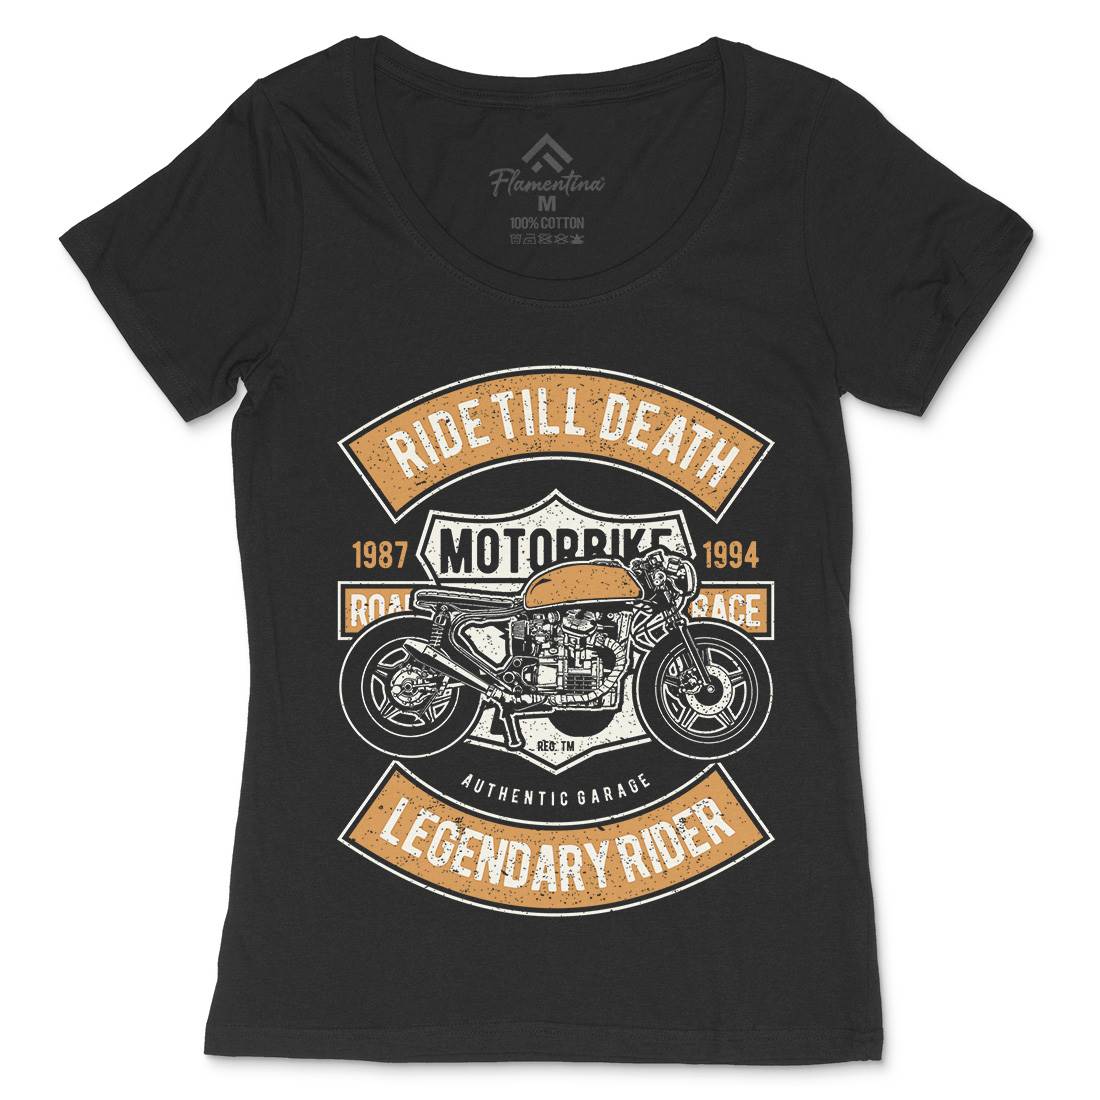 Ride Till Death Womens Scoop Neck T-Shirt Motorcycles A743